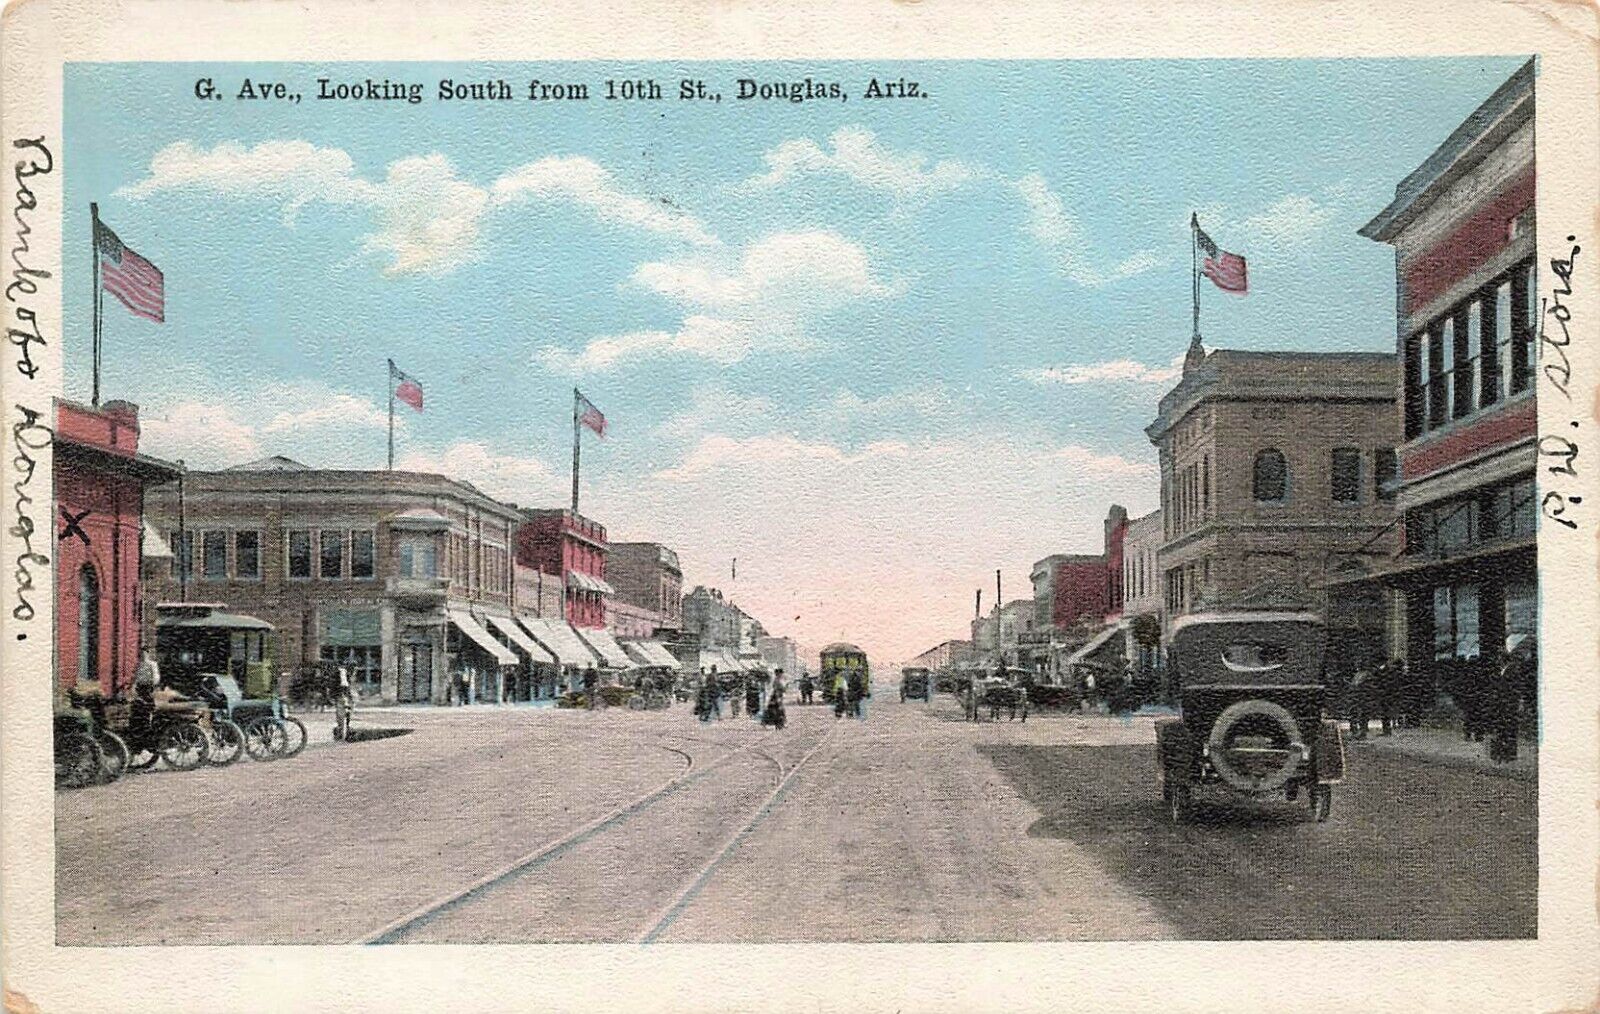 1921 ARIZONA POSTCARD: STREET SCENE OF G. AVE. FROM 10TH, DOUGLAS, AZ